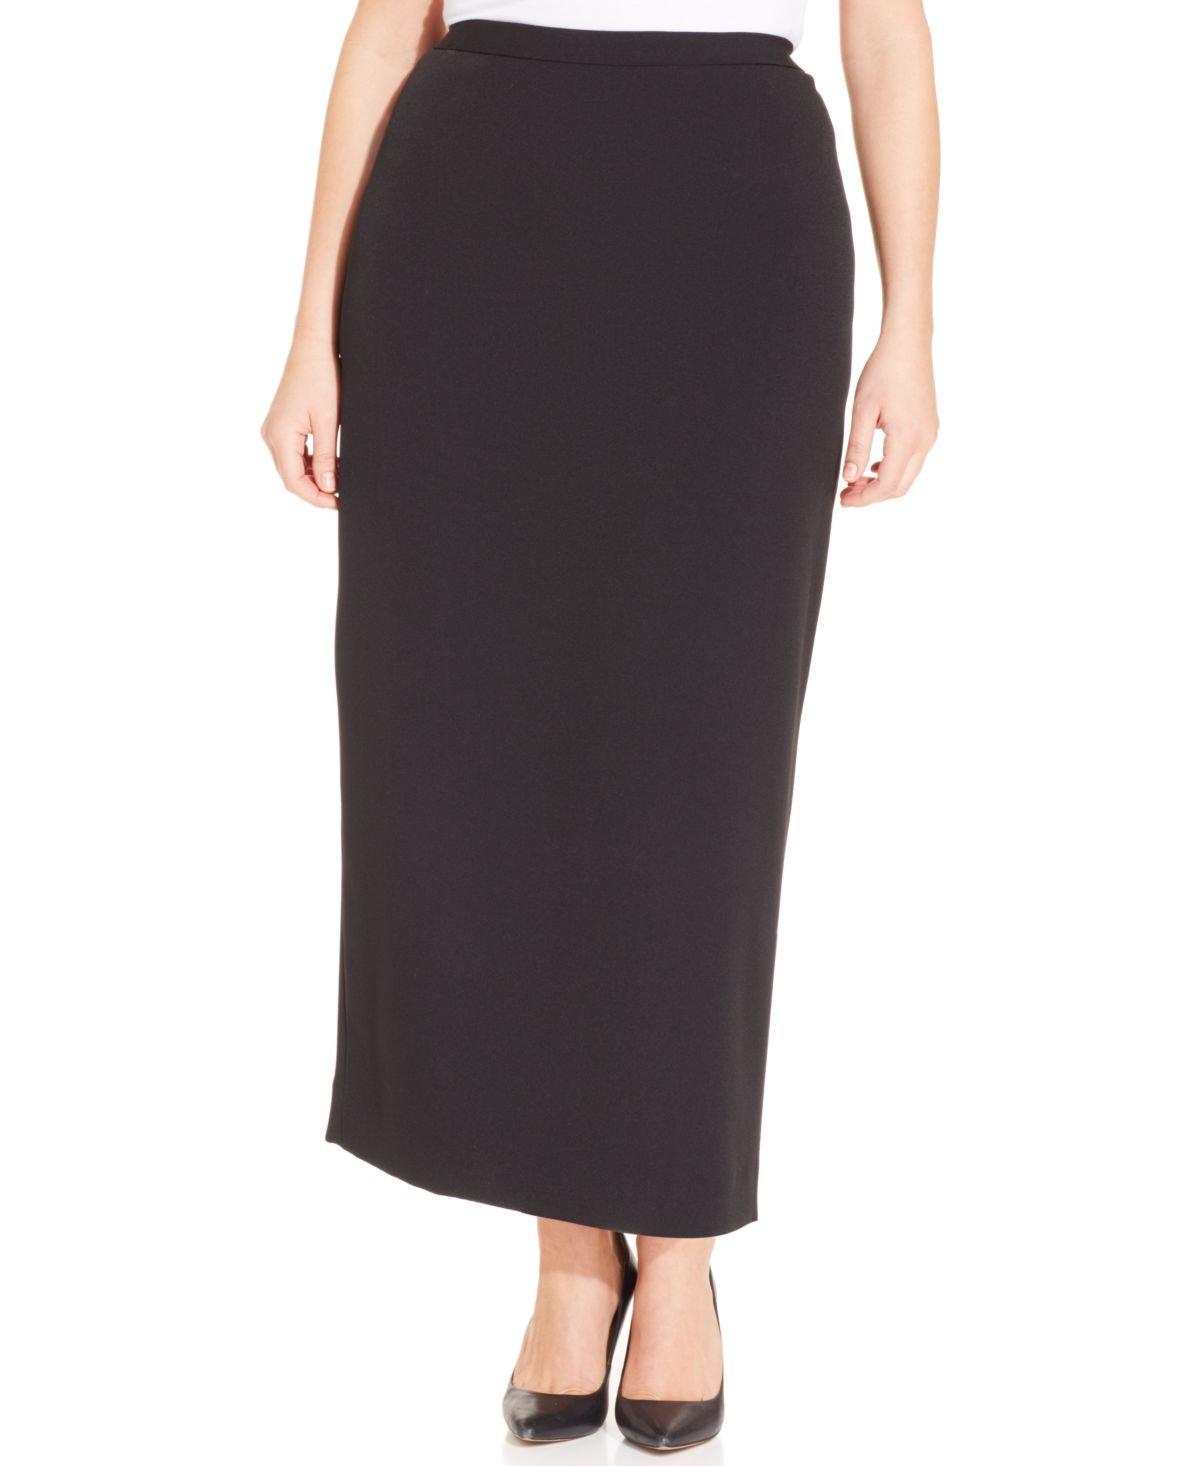 Kasper Plus Size Solid Column Skirt in Black - Lyst